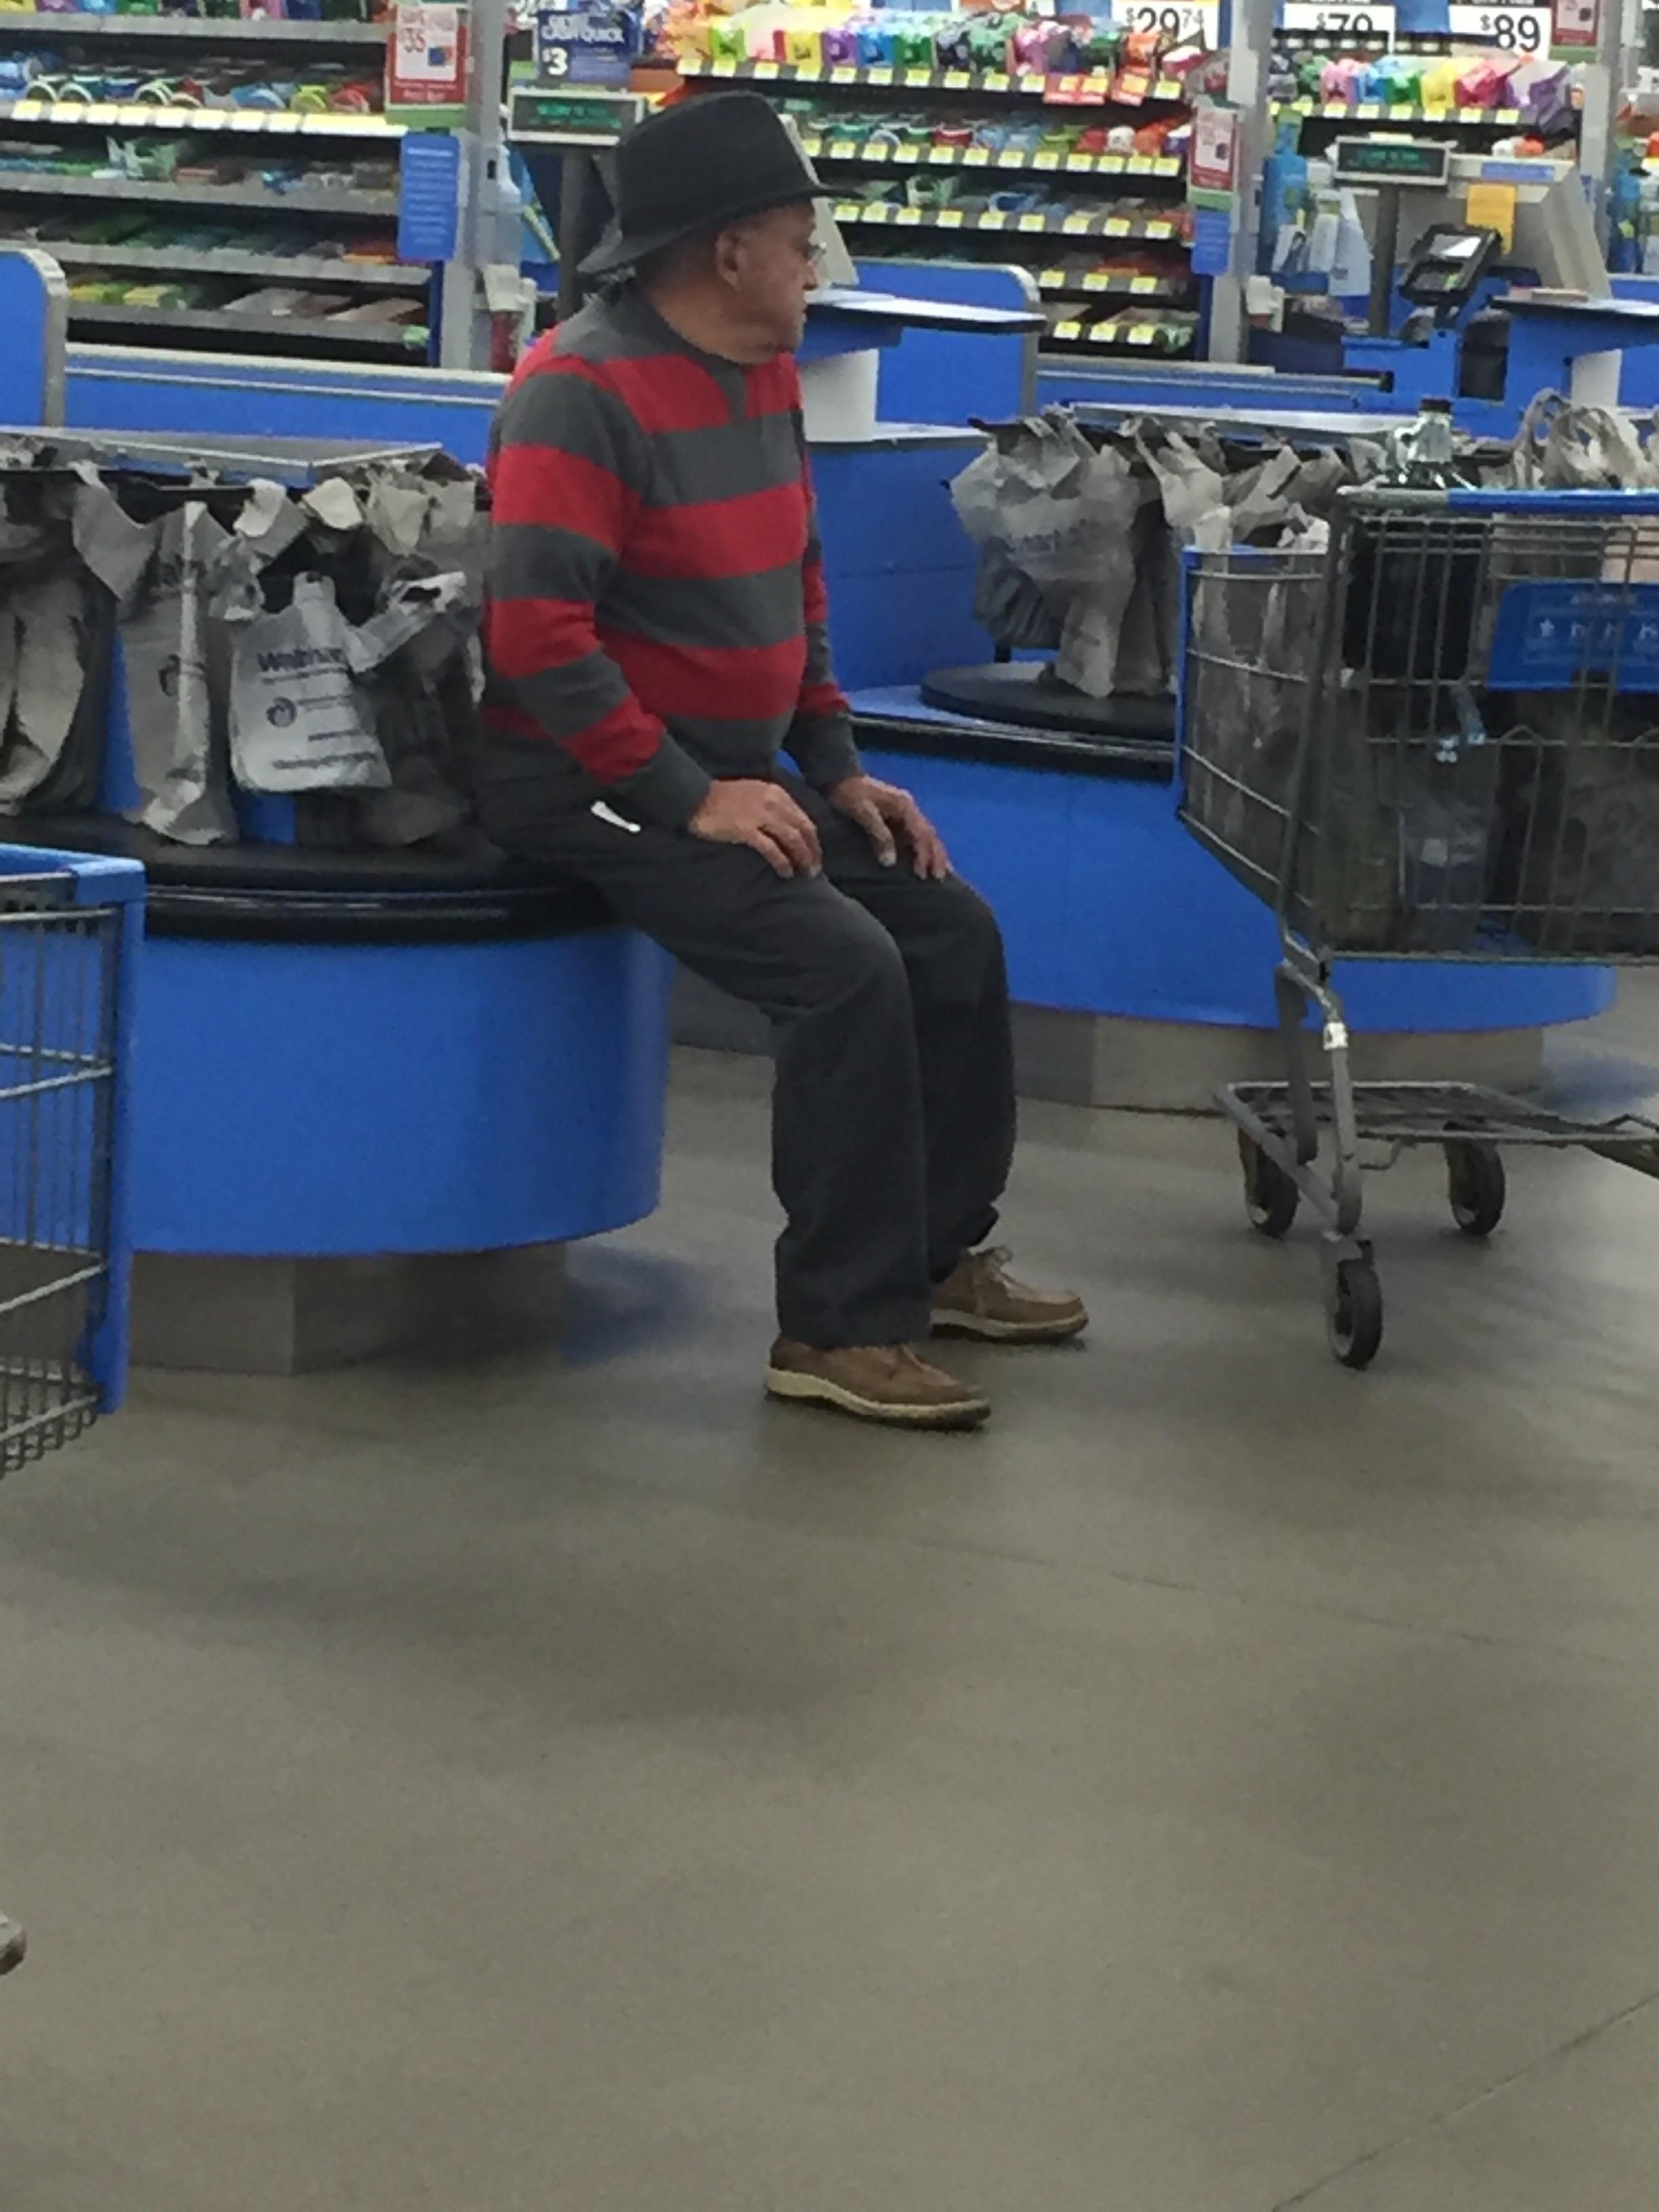 Friday the 13th vs. . . . This guy at Walmart